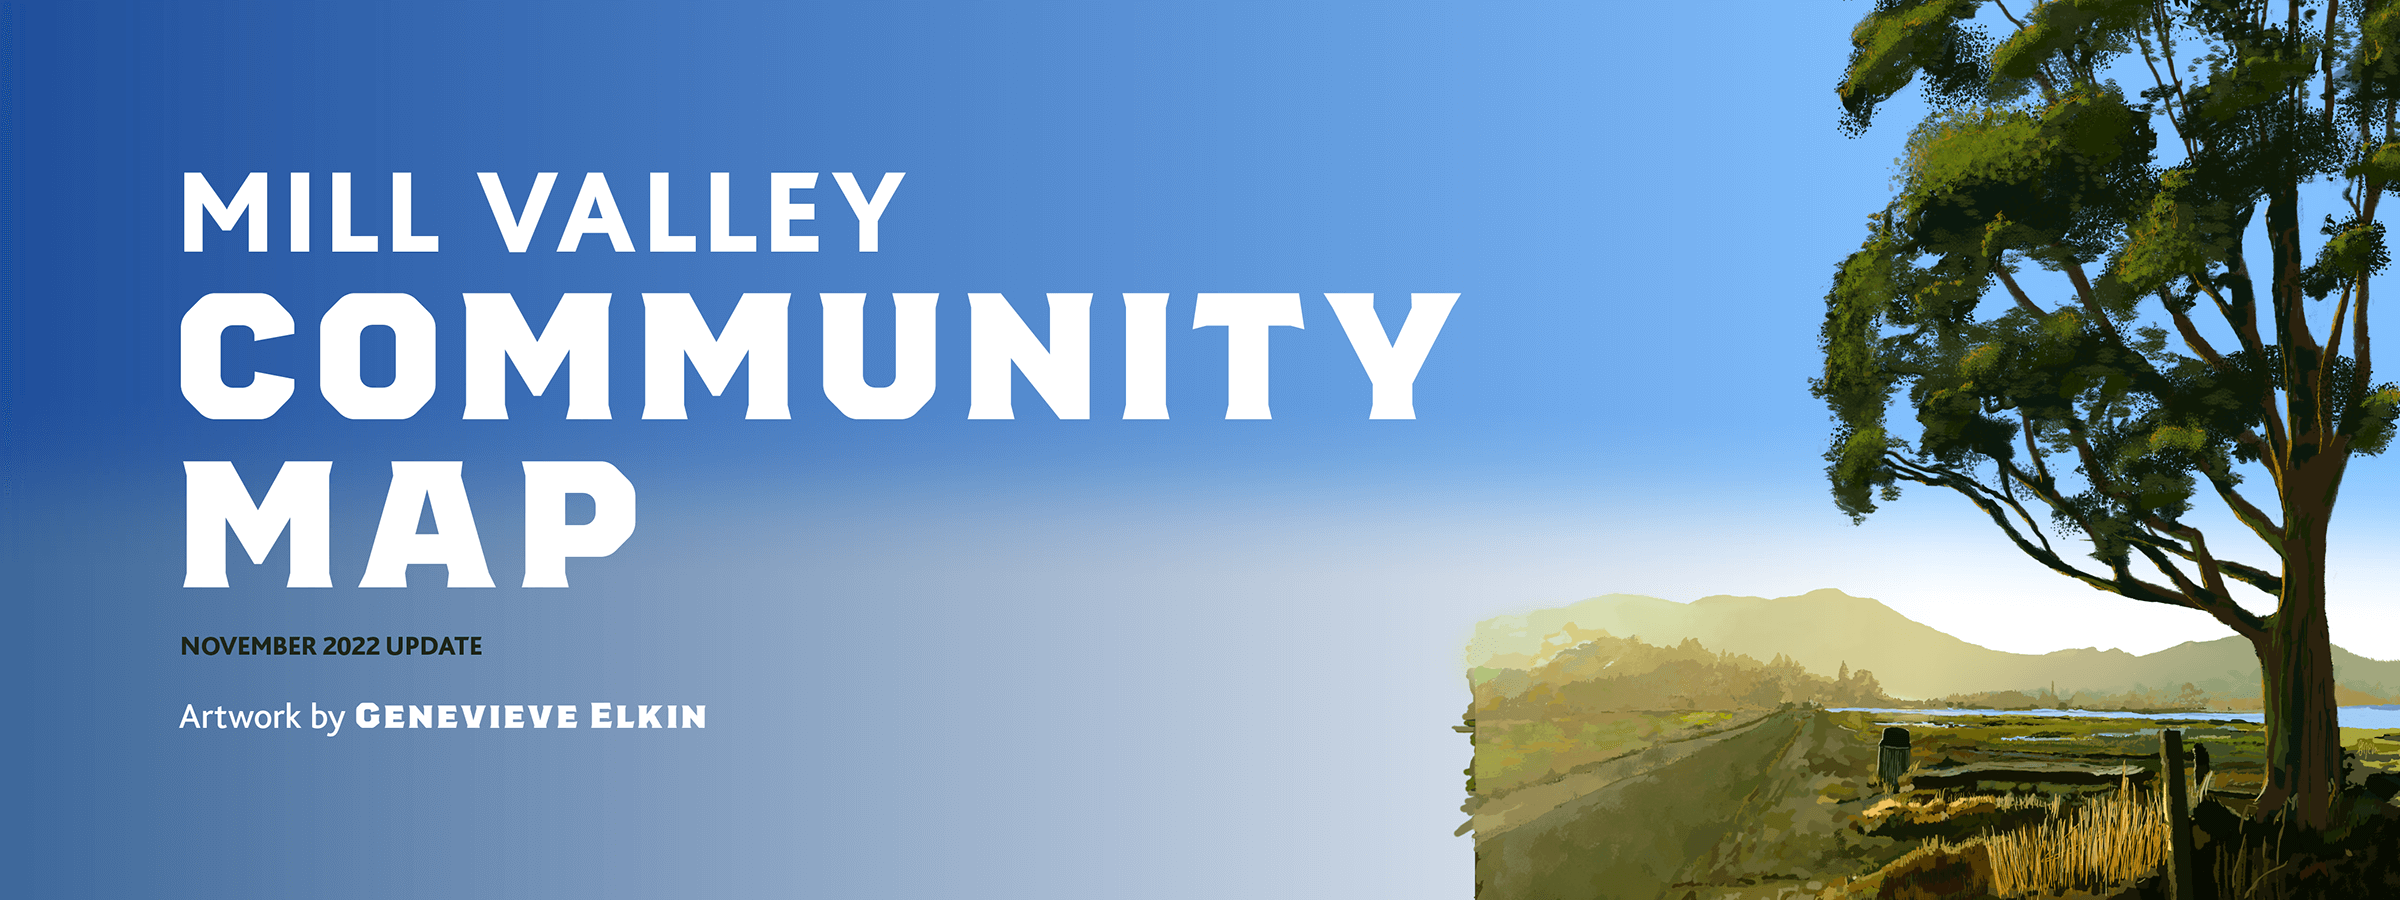 Mill Valley Community Map November 2022 update